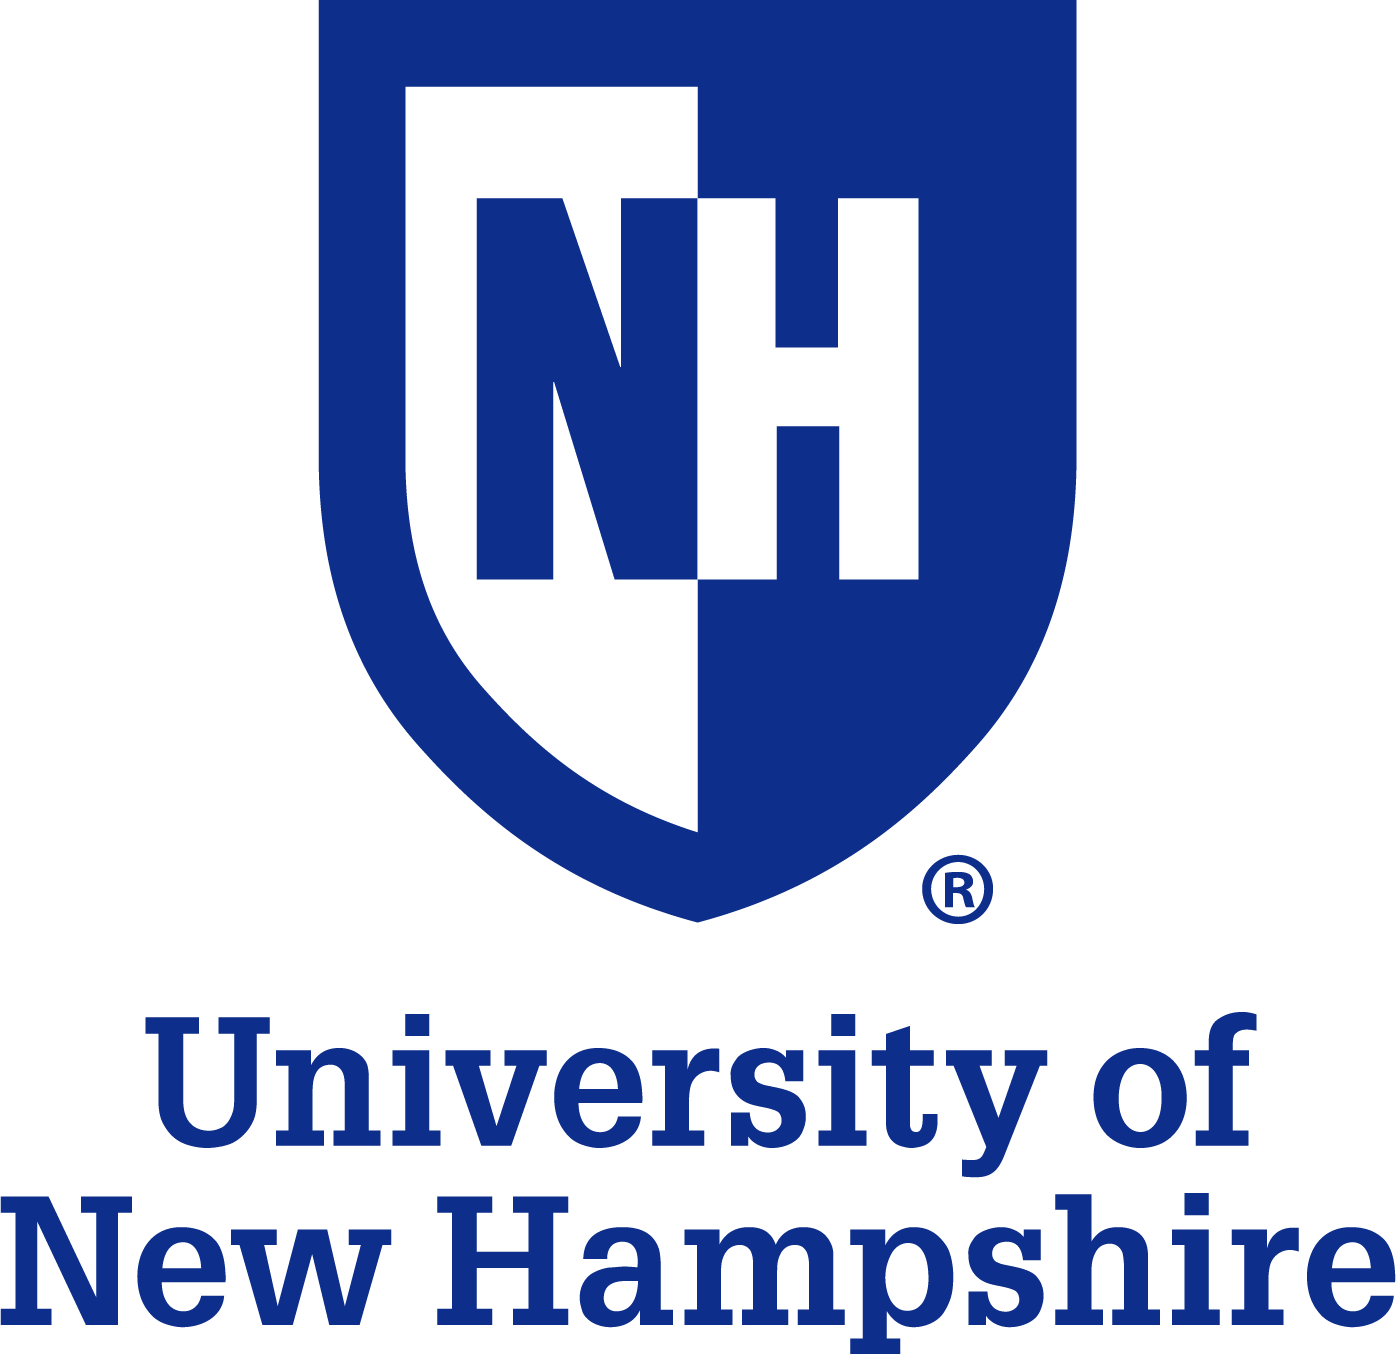 university-of-new-hampshire_logo-freelogovectors.net_.png